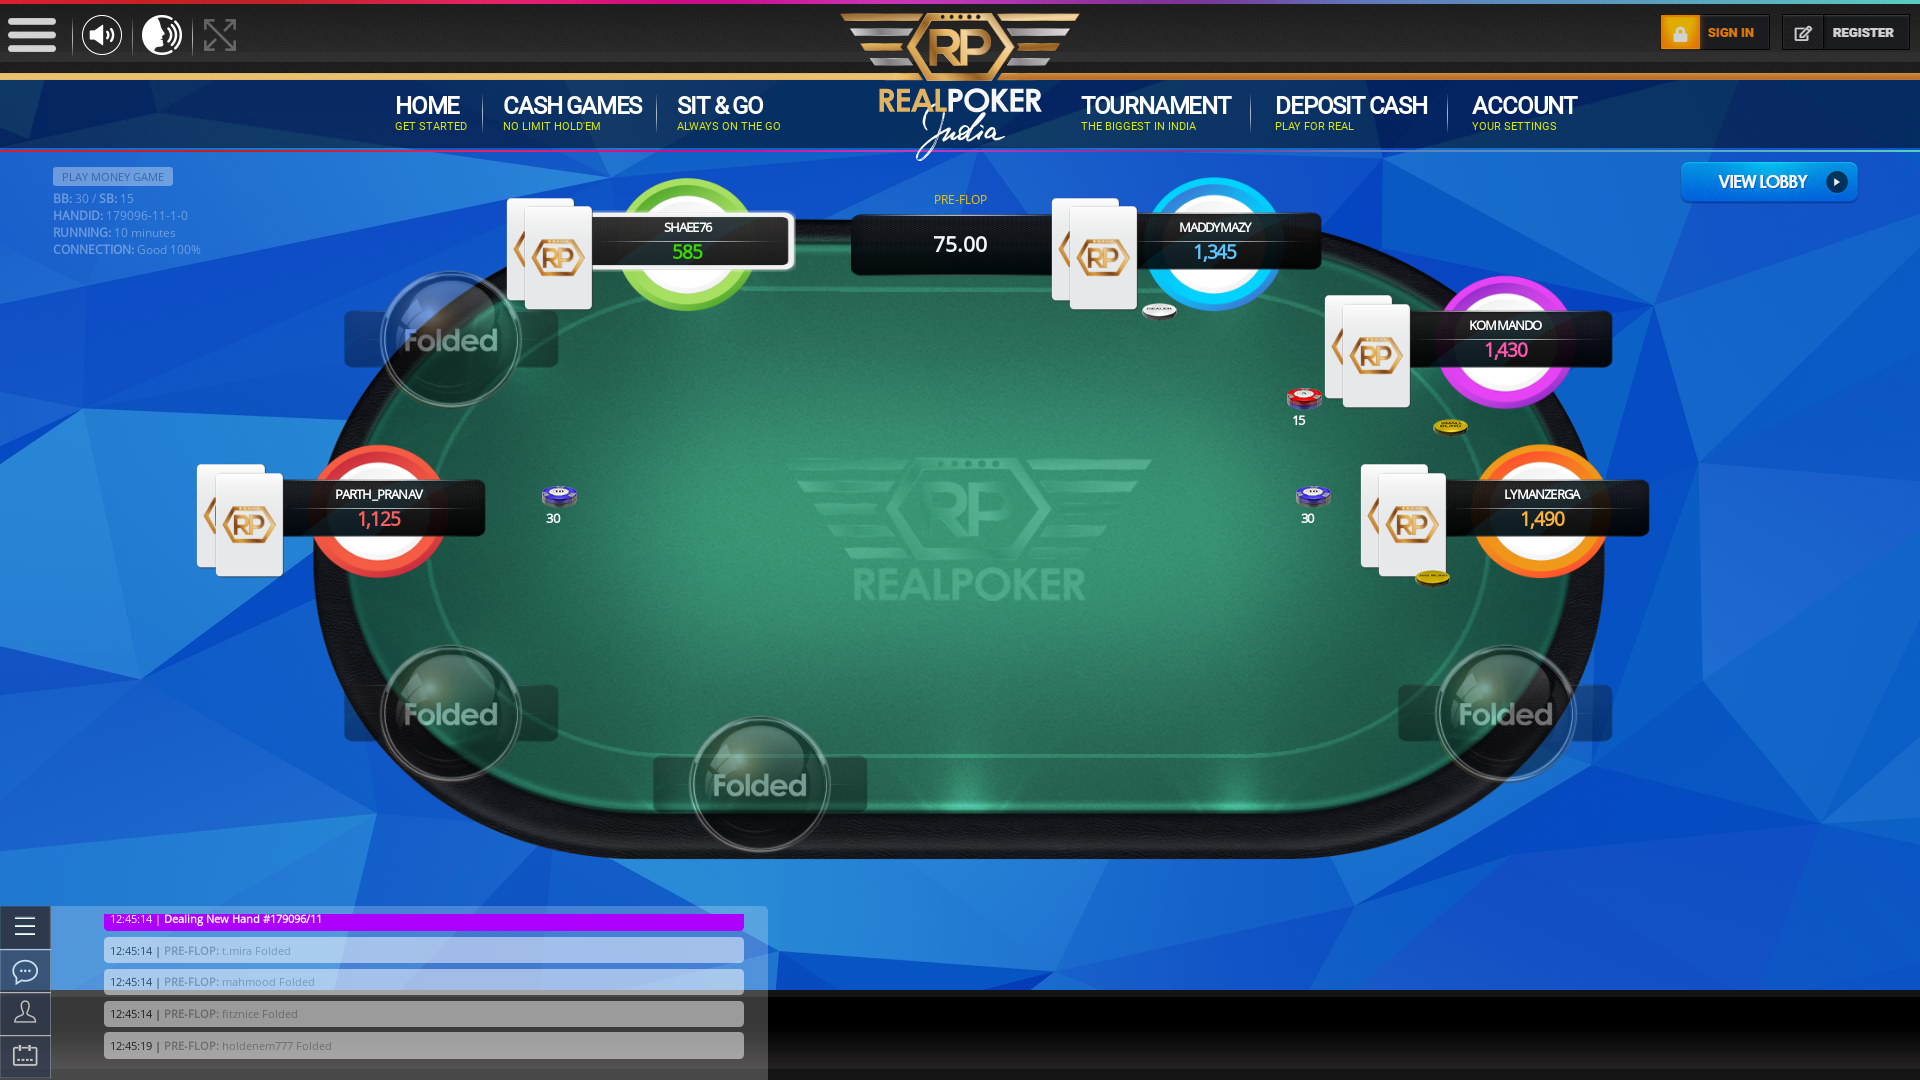 Udipi Poker Website from August